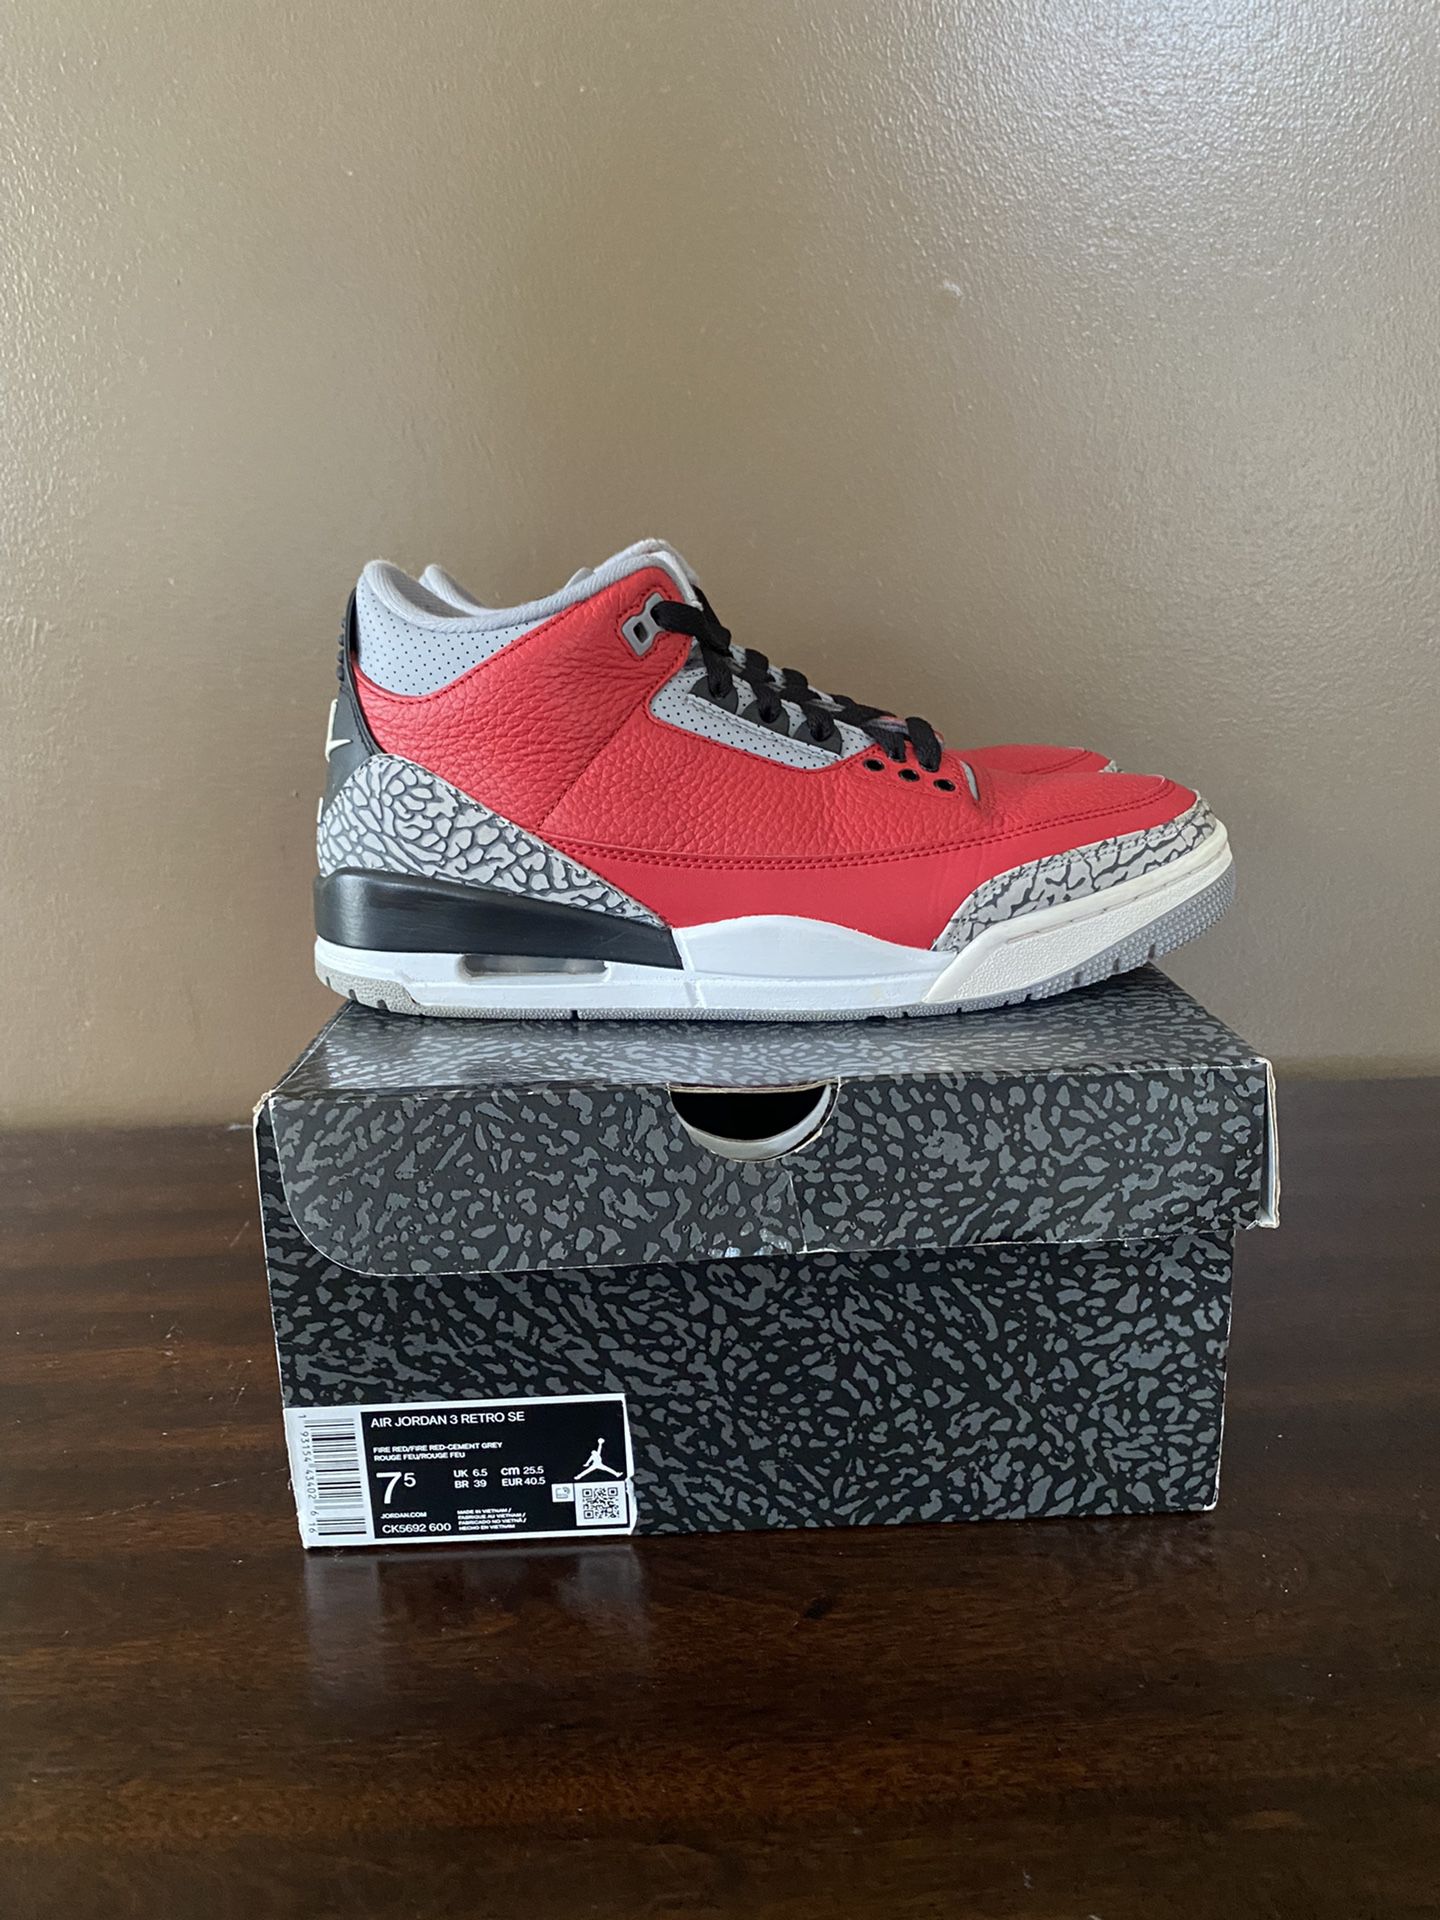 Nike Air Jordan 3 Retro SE Unite Fire Red/Cement Grey CK5692